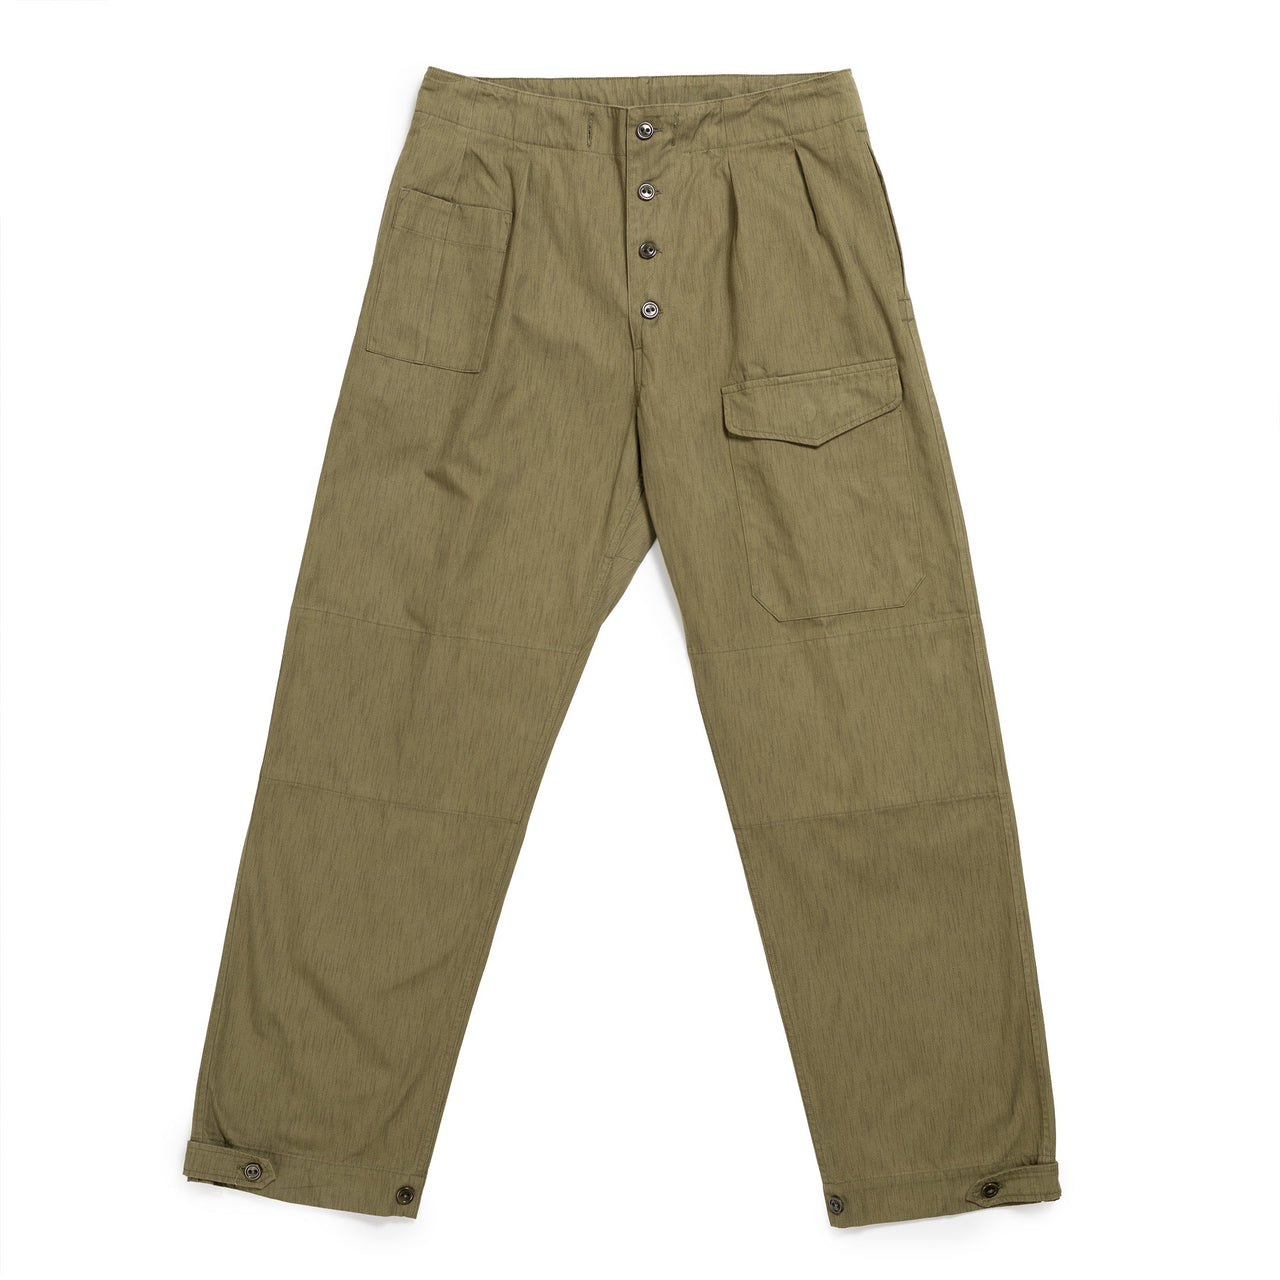 USGI BDU Trousers Camouflage Pants Desert Camo | Army Navy Warehouse